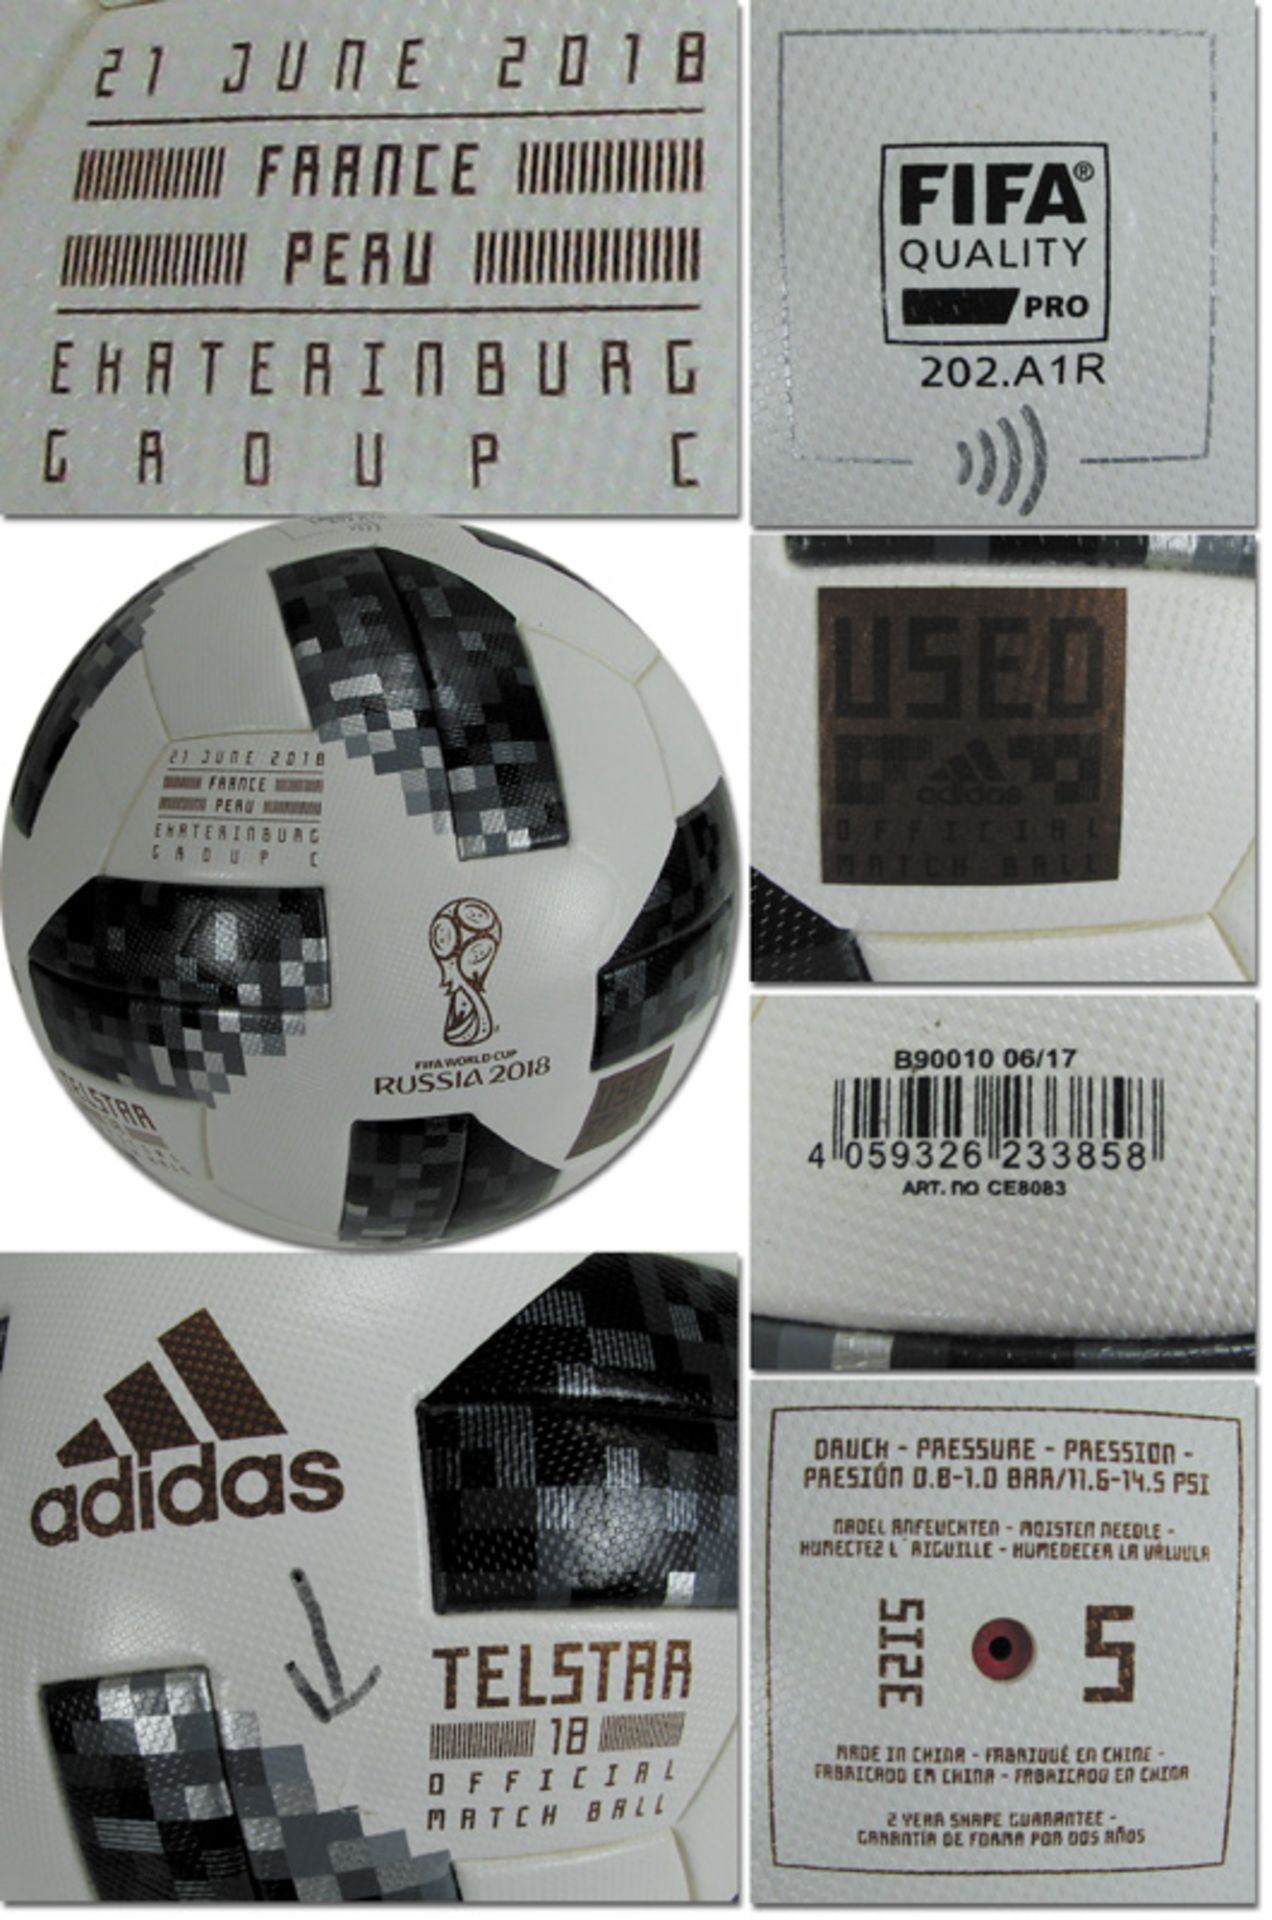 World Cup 2018 Original Adidas Used match ball - Original match ball from the Football World Cup in 